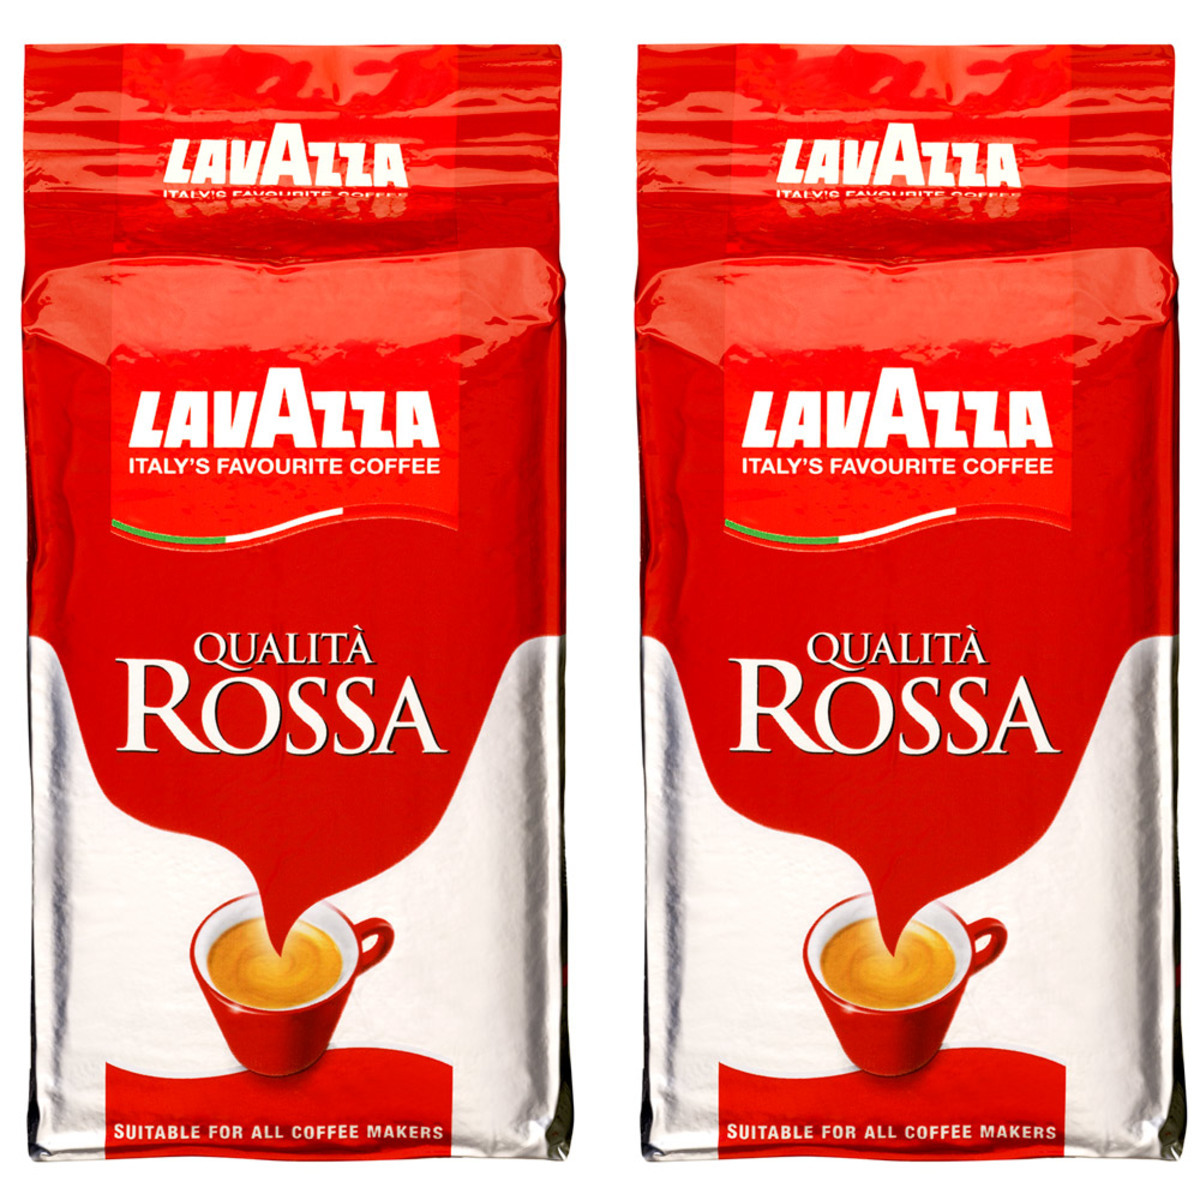 Lavazza Qualita Rossa Ground Coffee, 2 x 500g